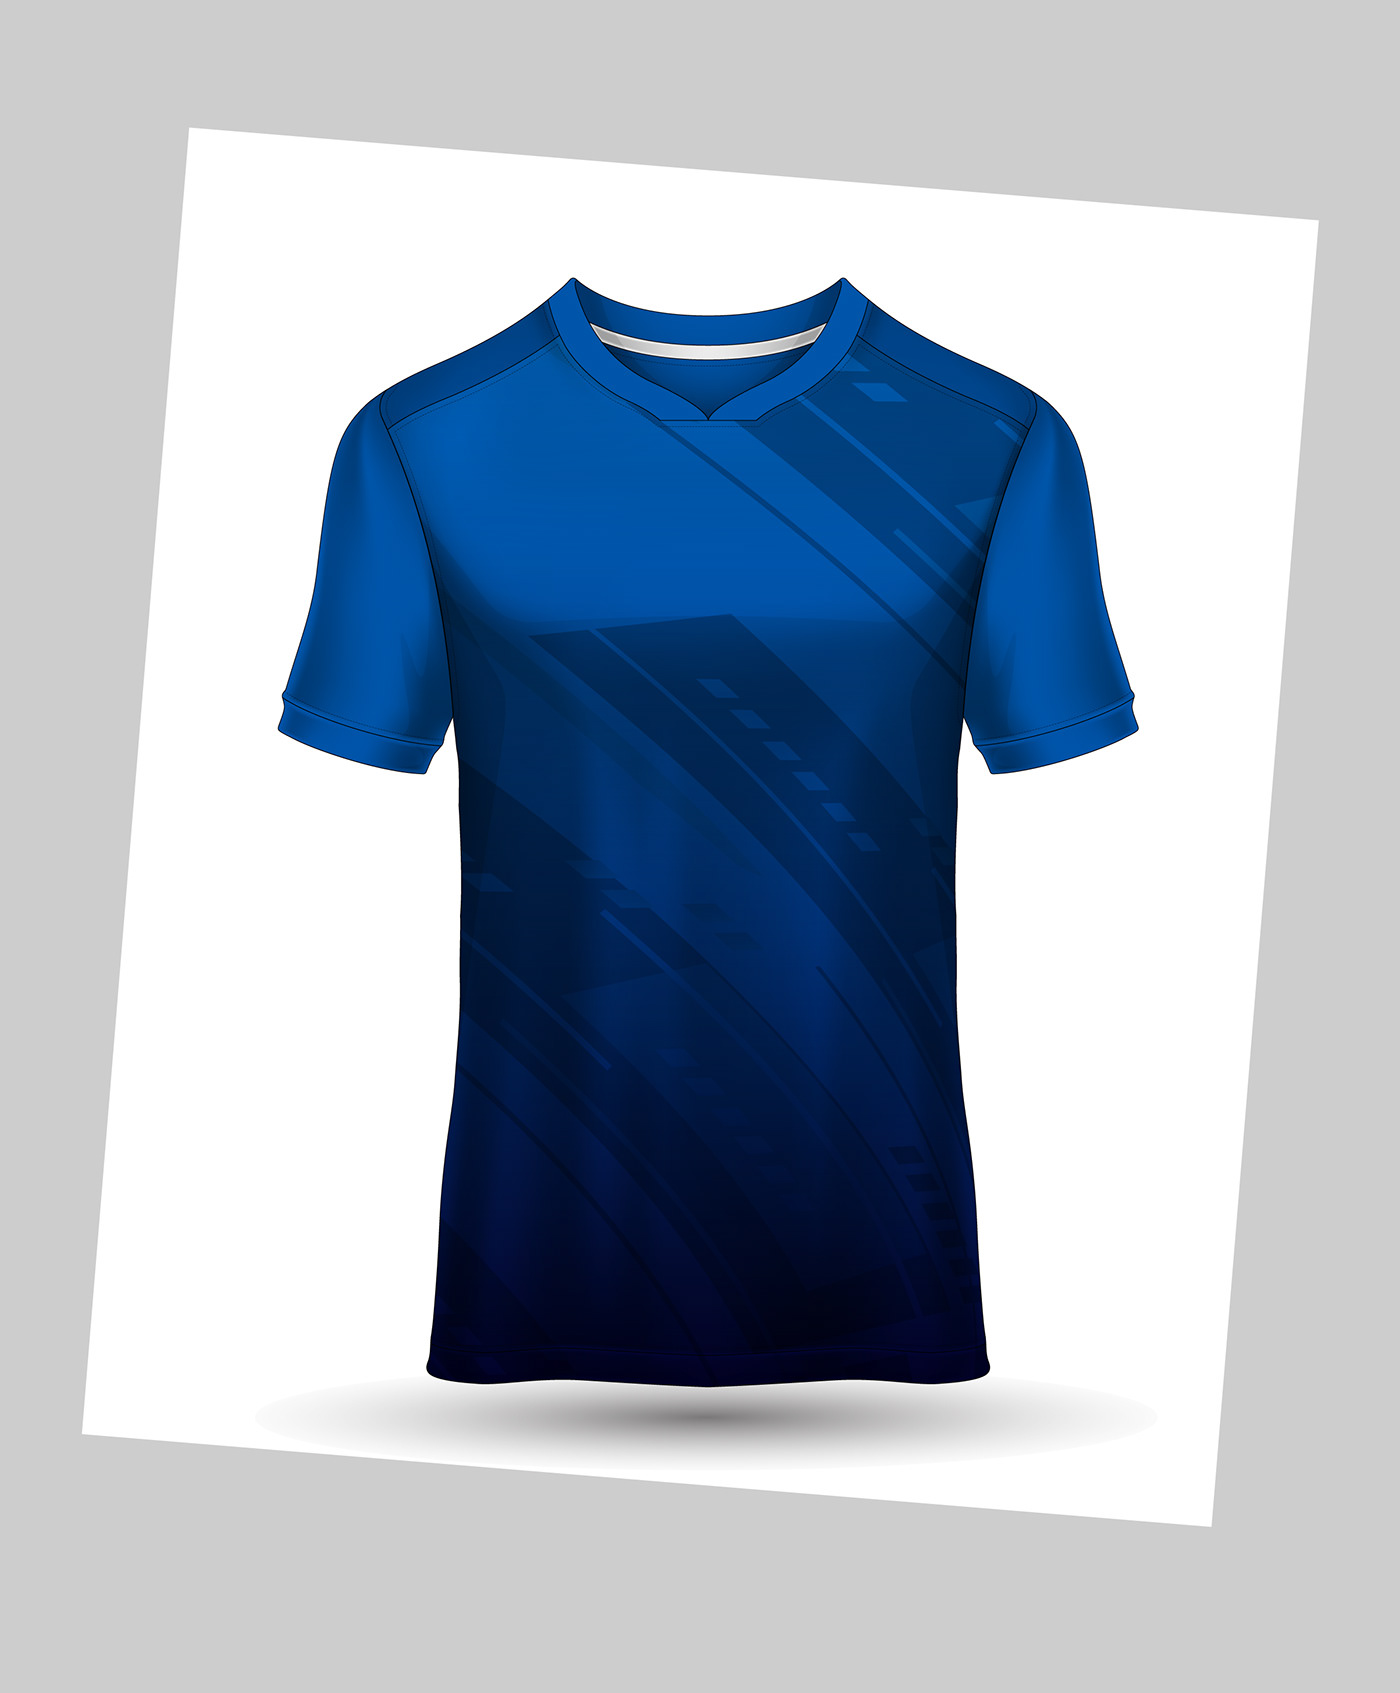 Jersey Design sports tshirtdesign tshirts Tshirt Design t-shirt tshirt T-Shirt Design jersey designer sporttshirt